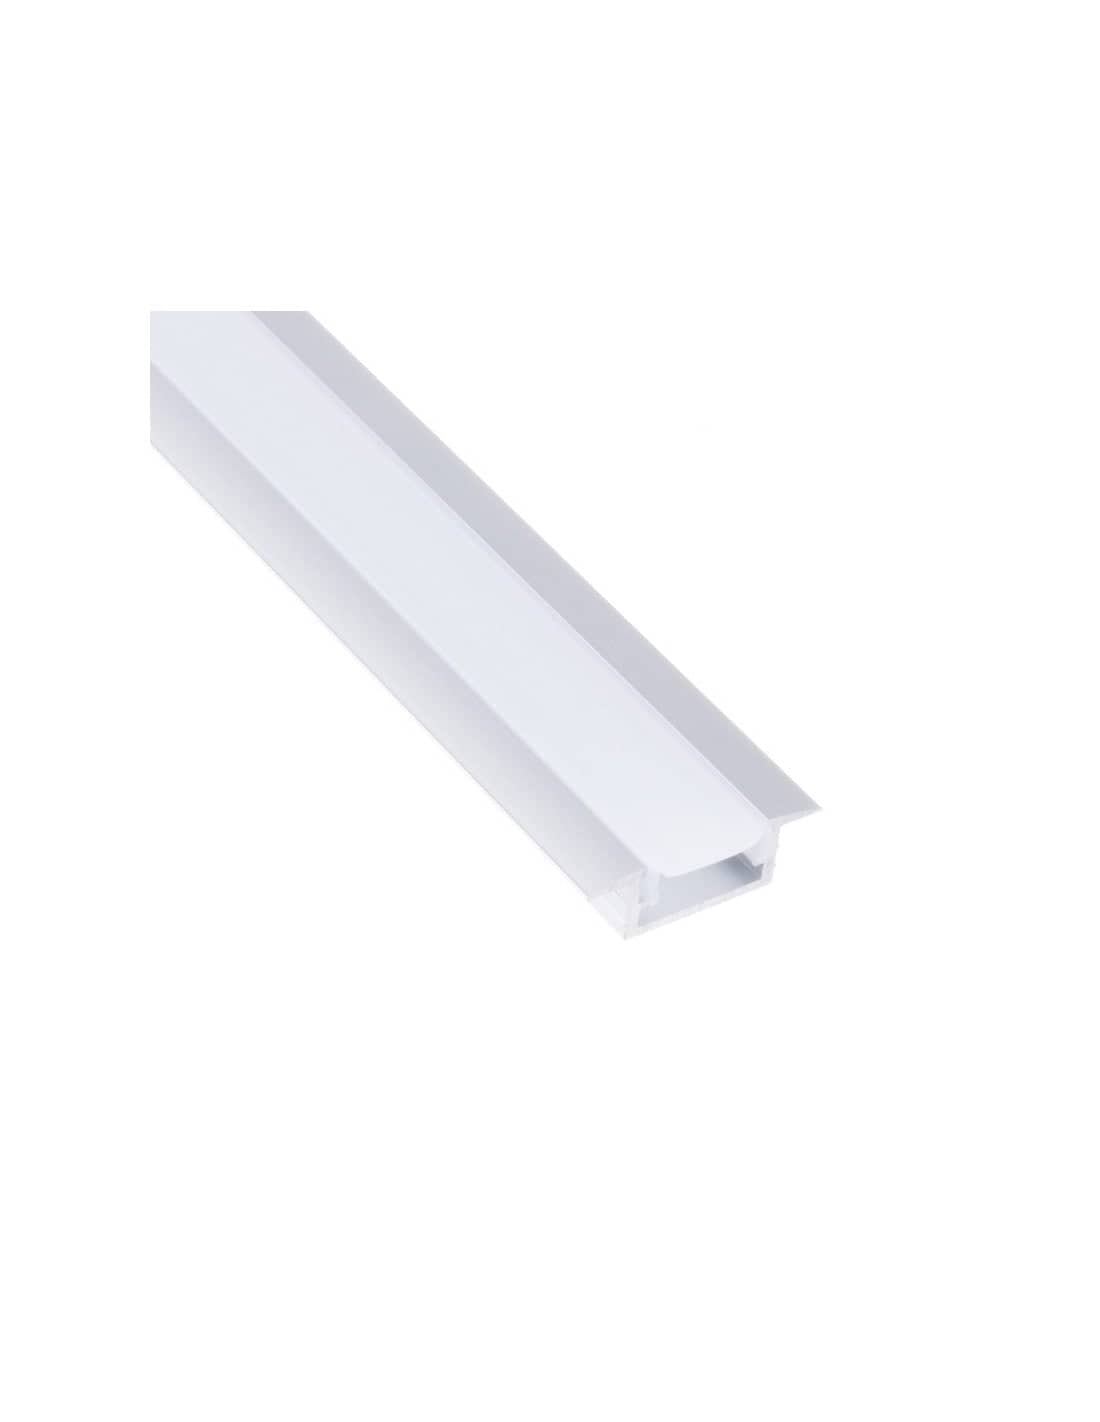 LED Profile INLINE Mini XL Aluminium/Opal   PROF-INLINEM-XL-OP-2M-W